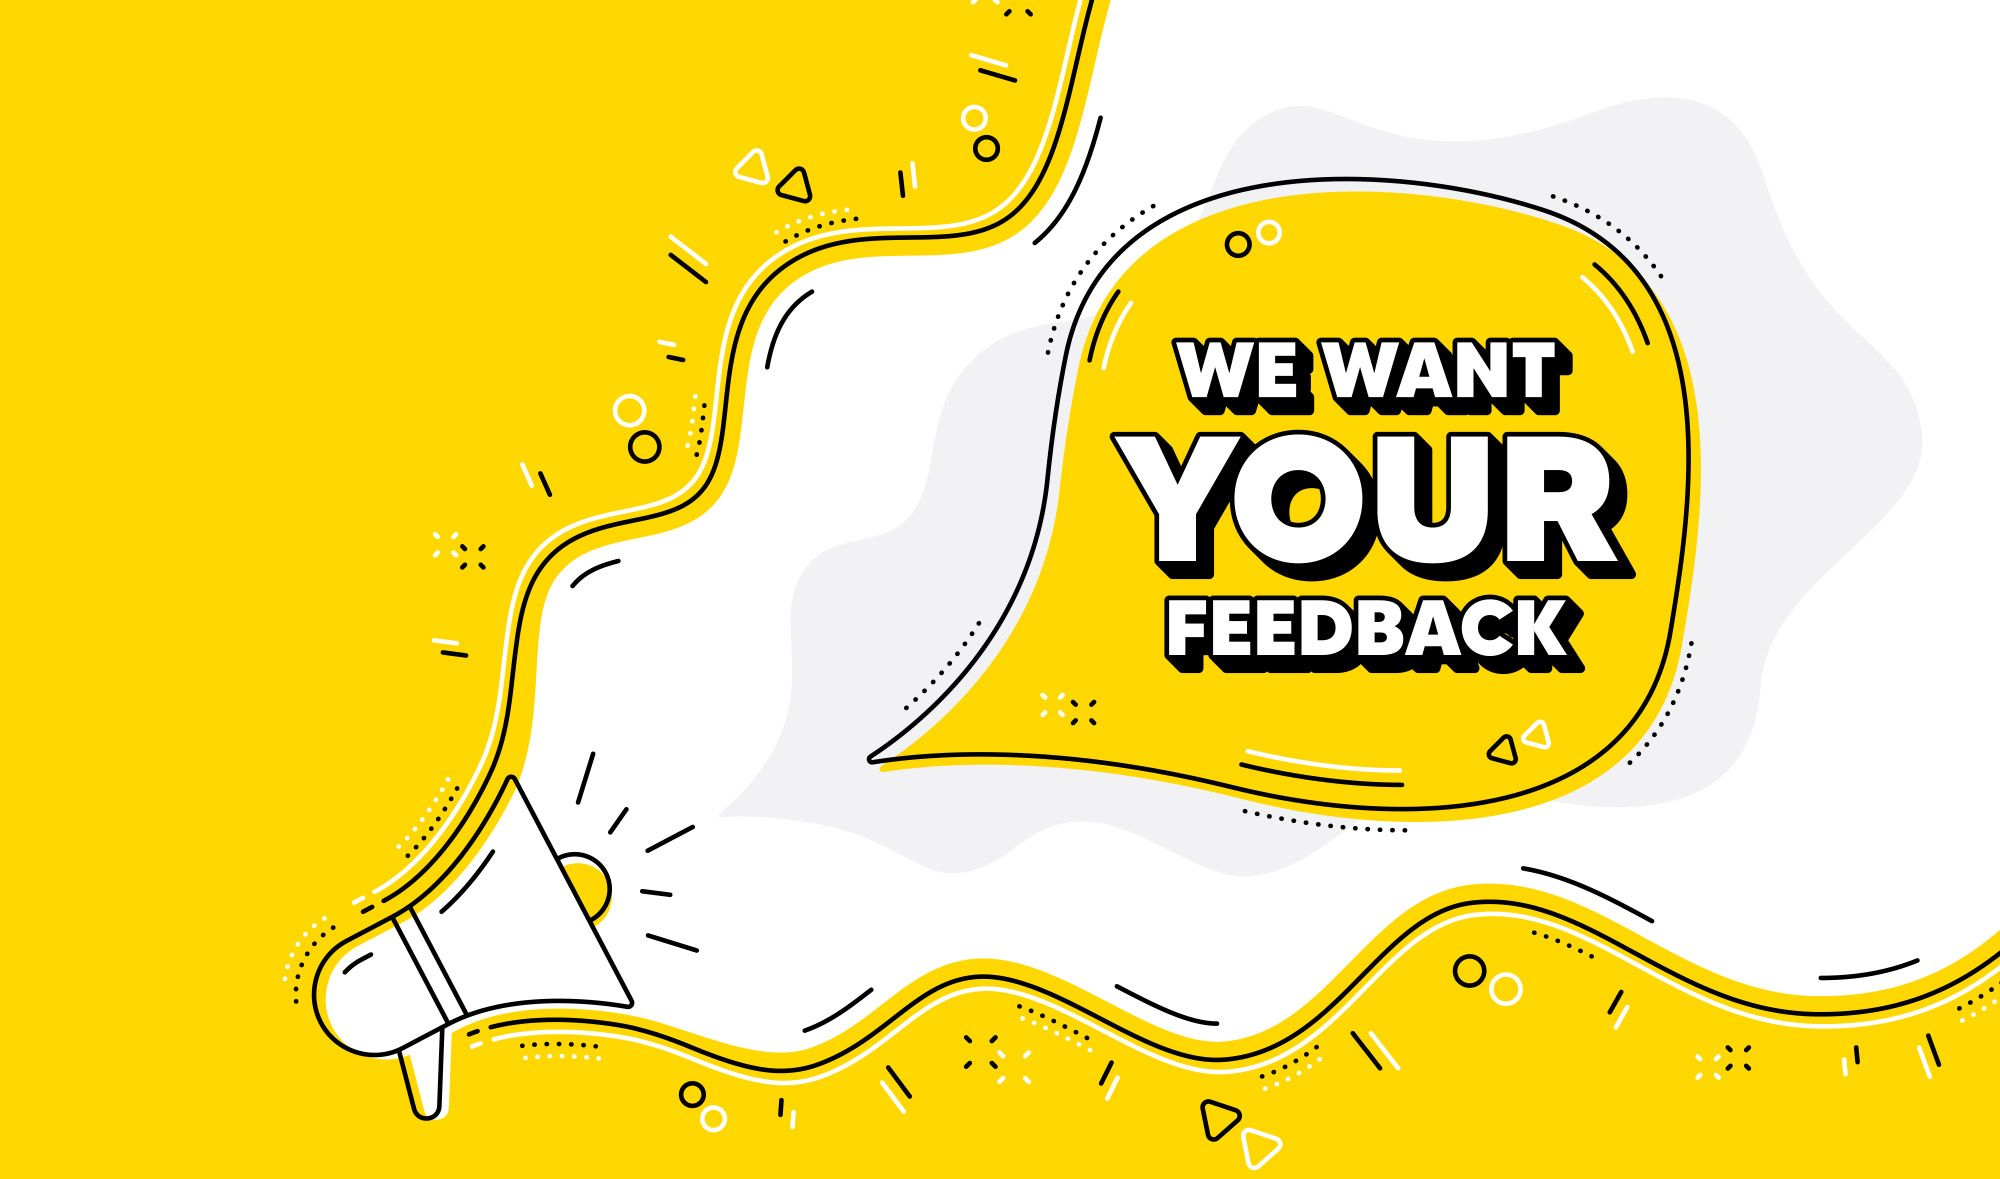 360_degree_feedback - we want your feedback